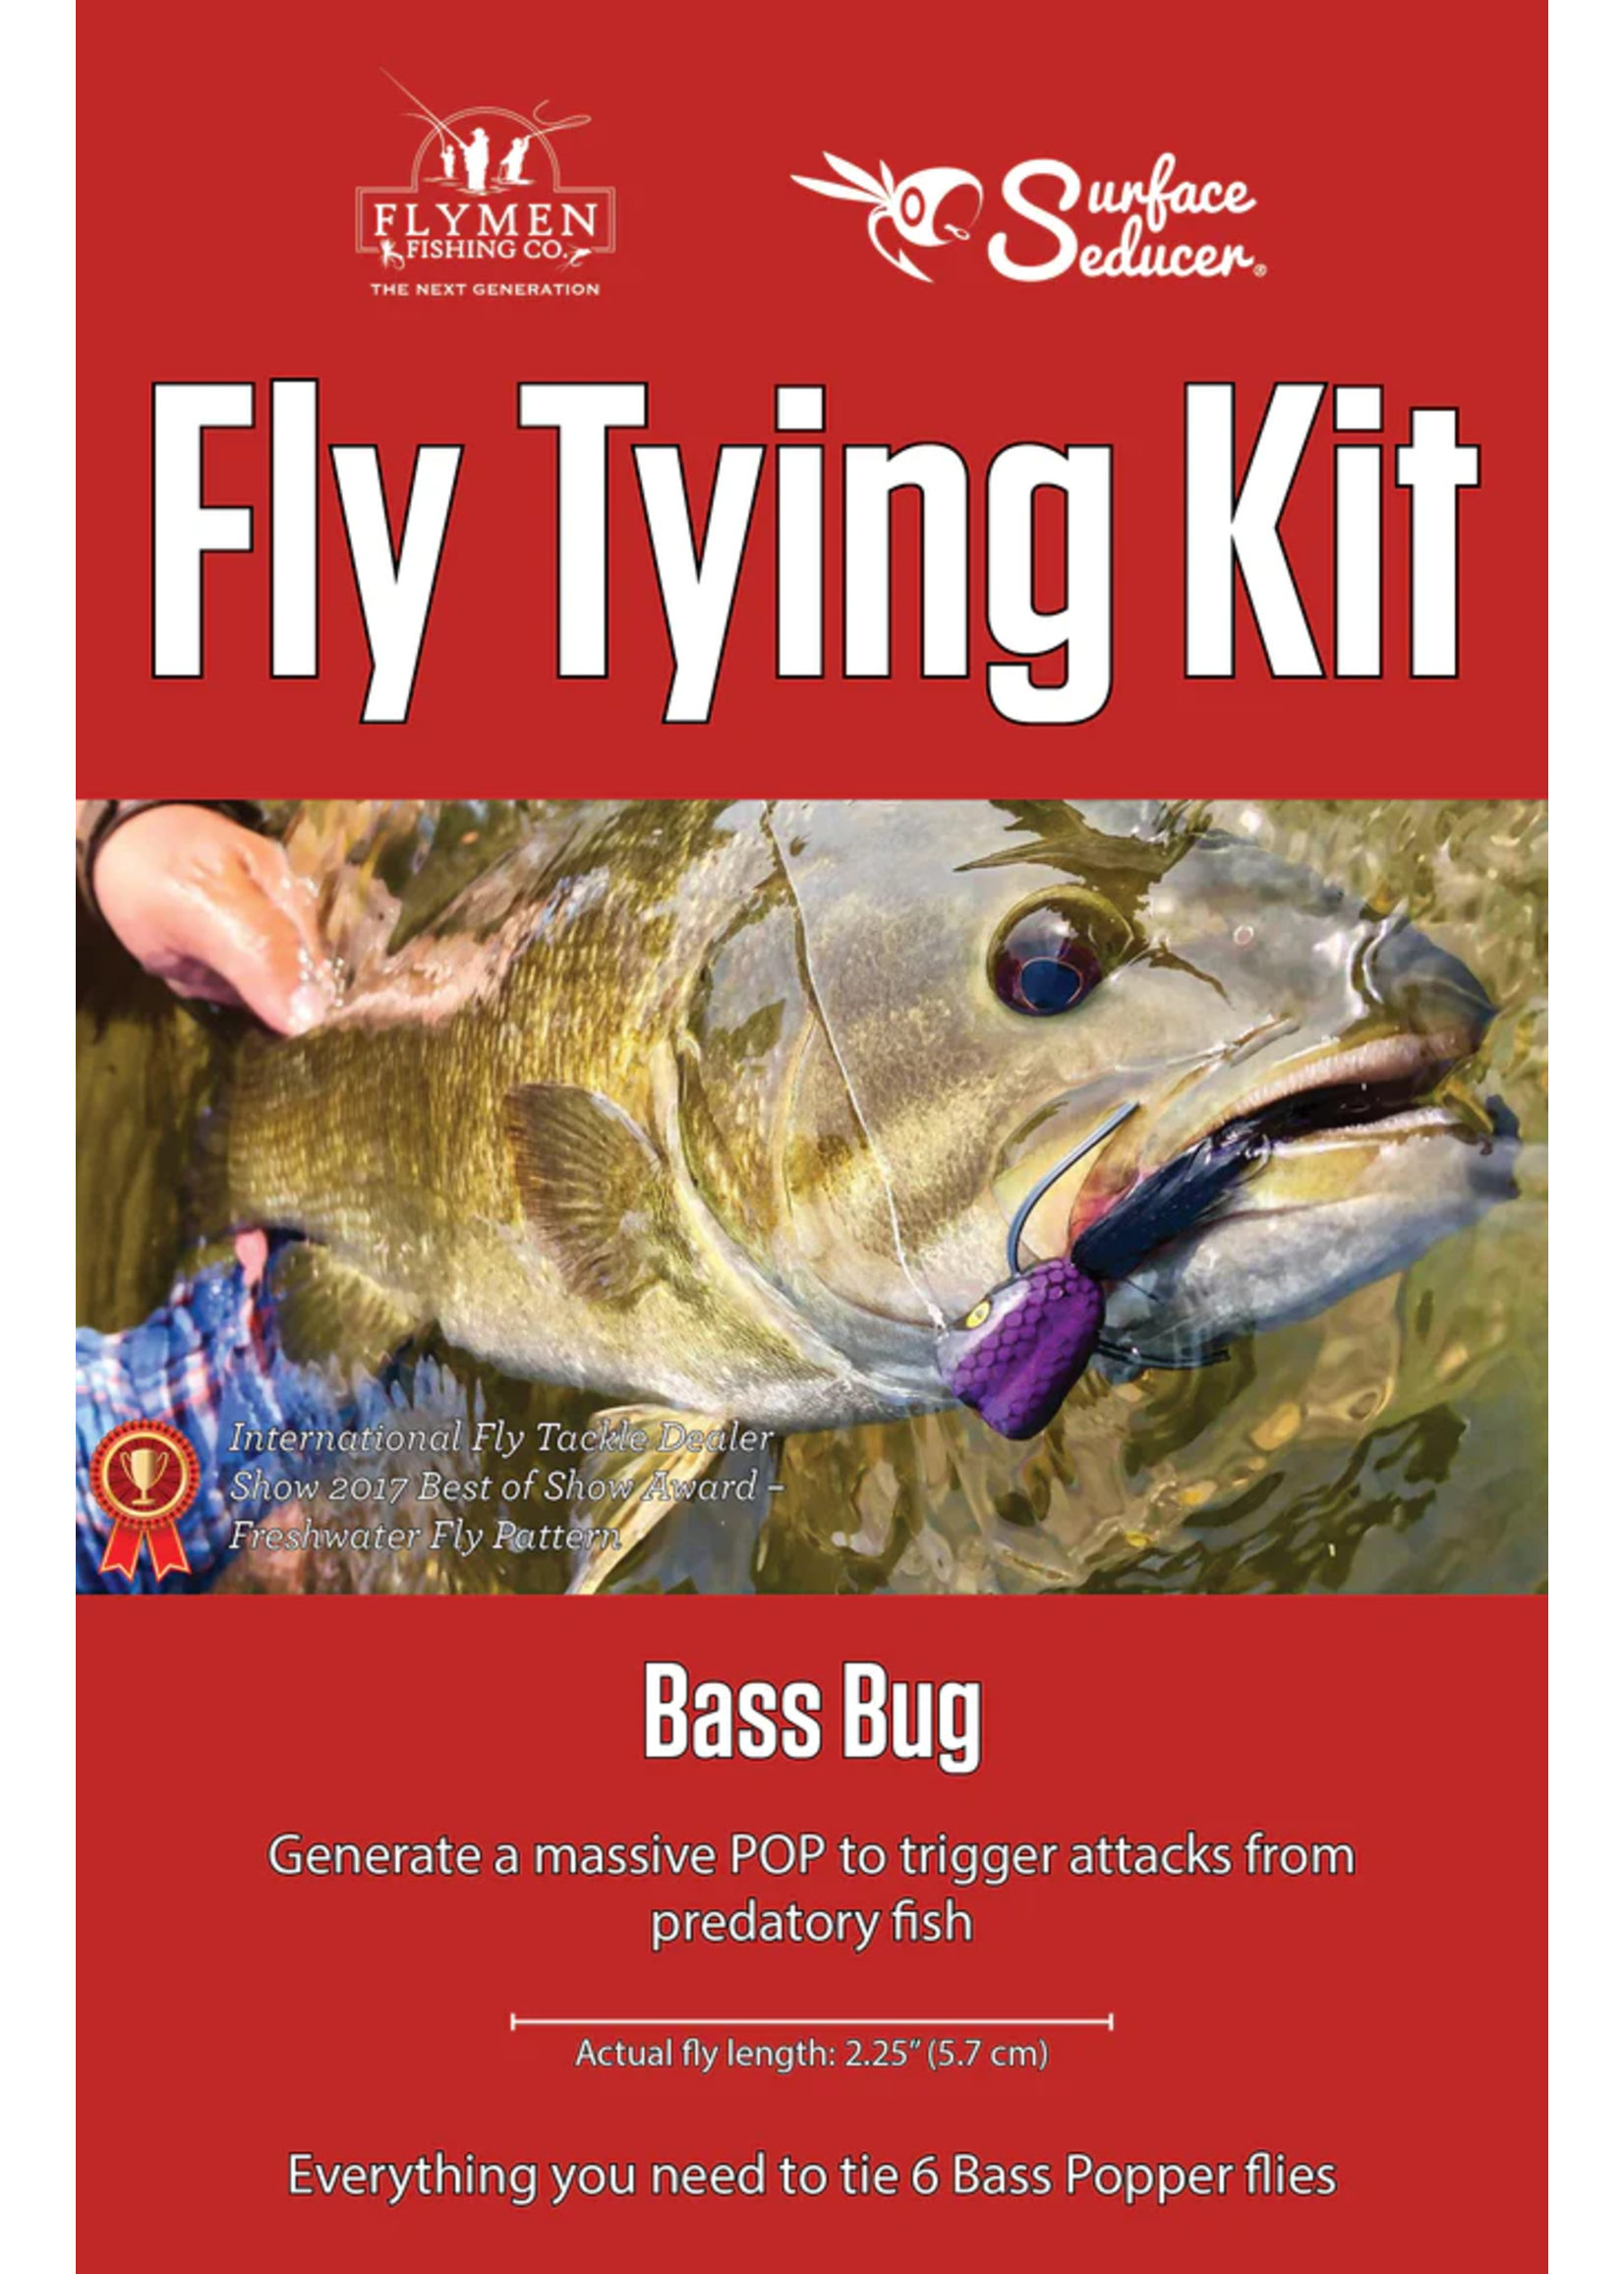 Flymen Fishing Company Flymen Fishing Company Fly Tying Kit: Surface Seducer Bass Bug